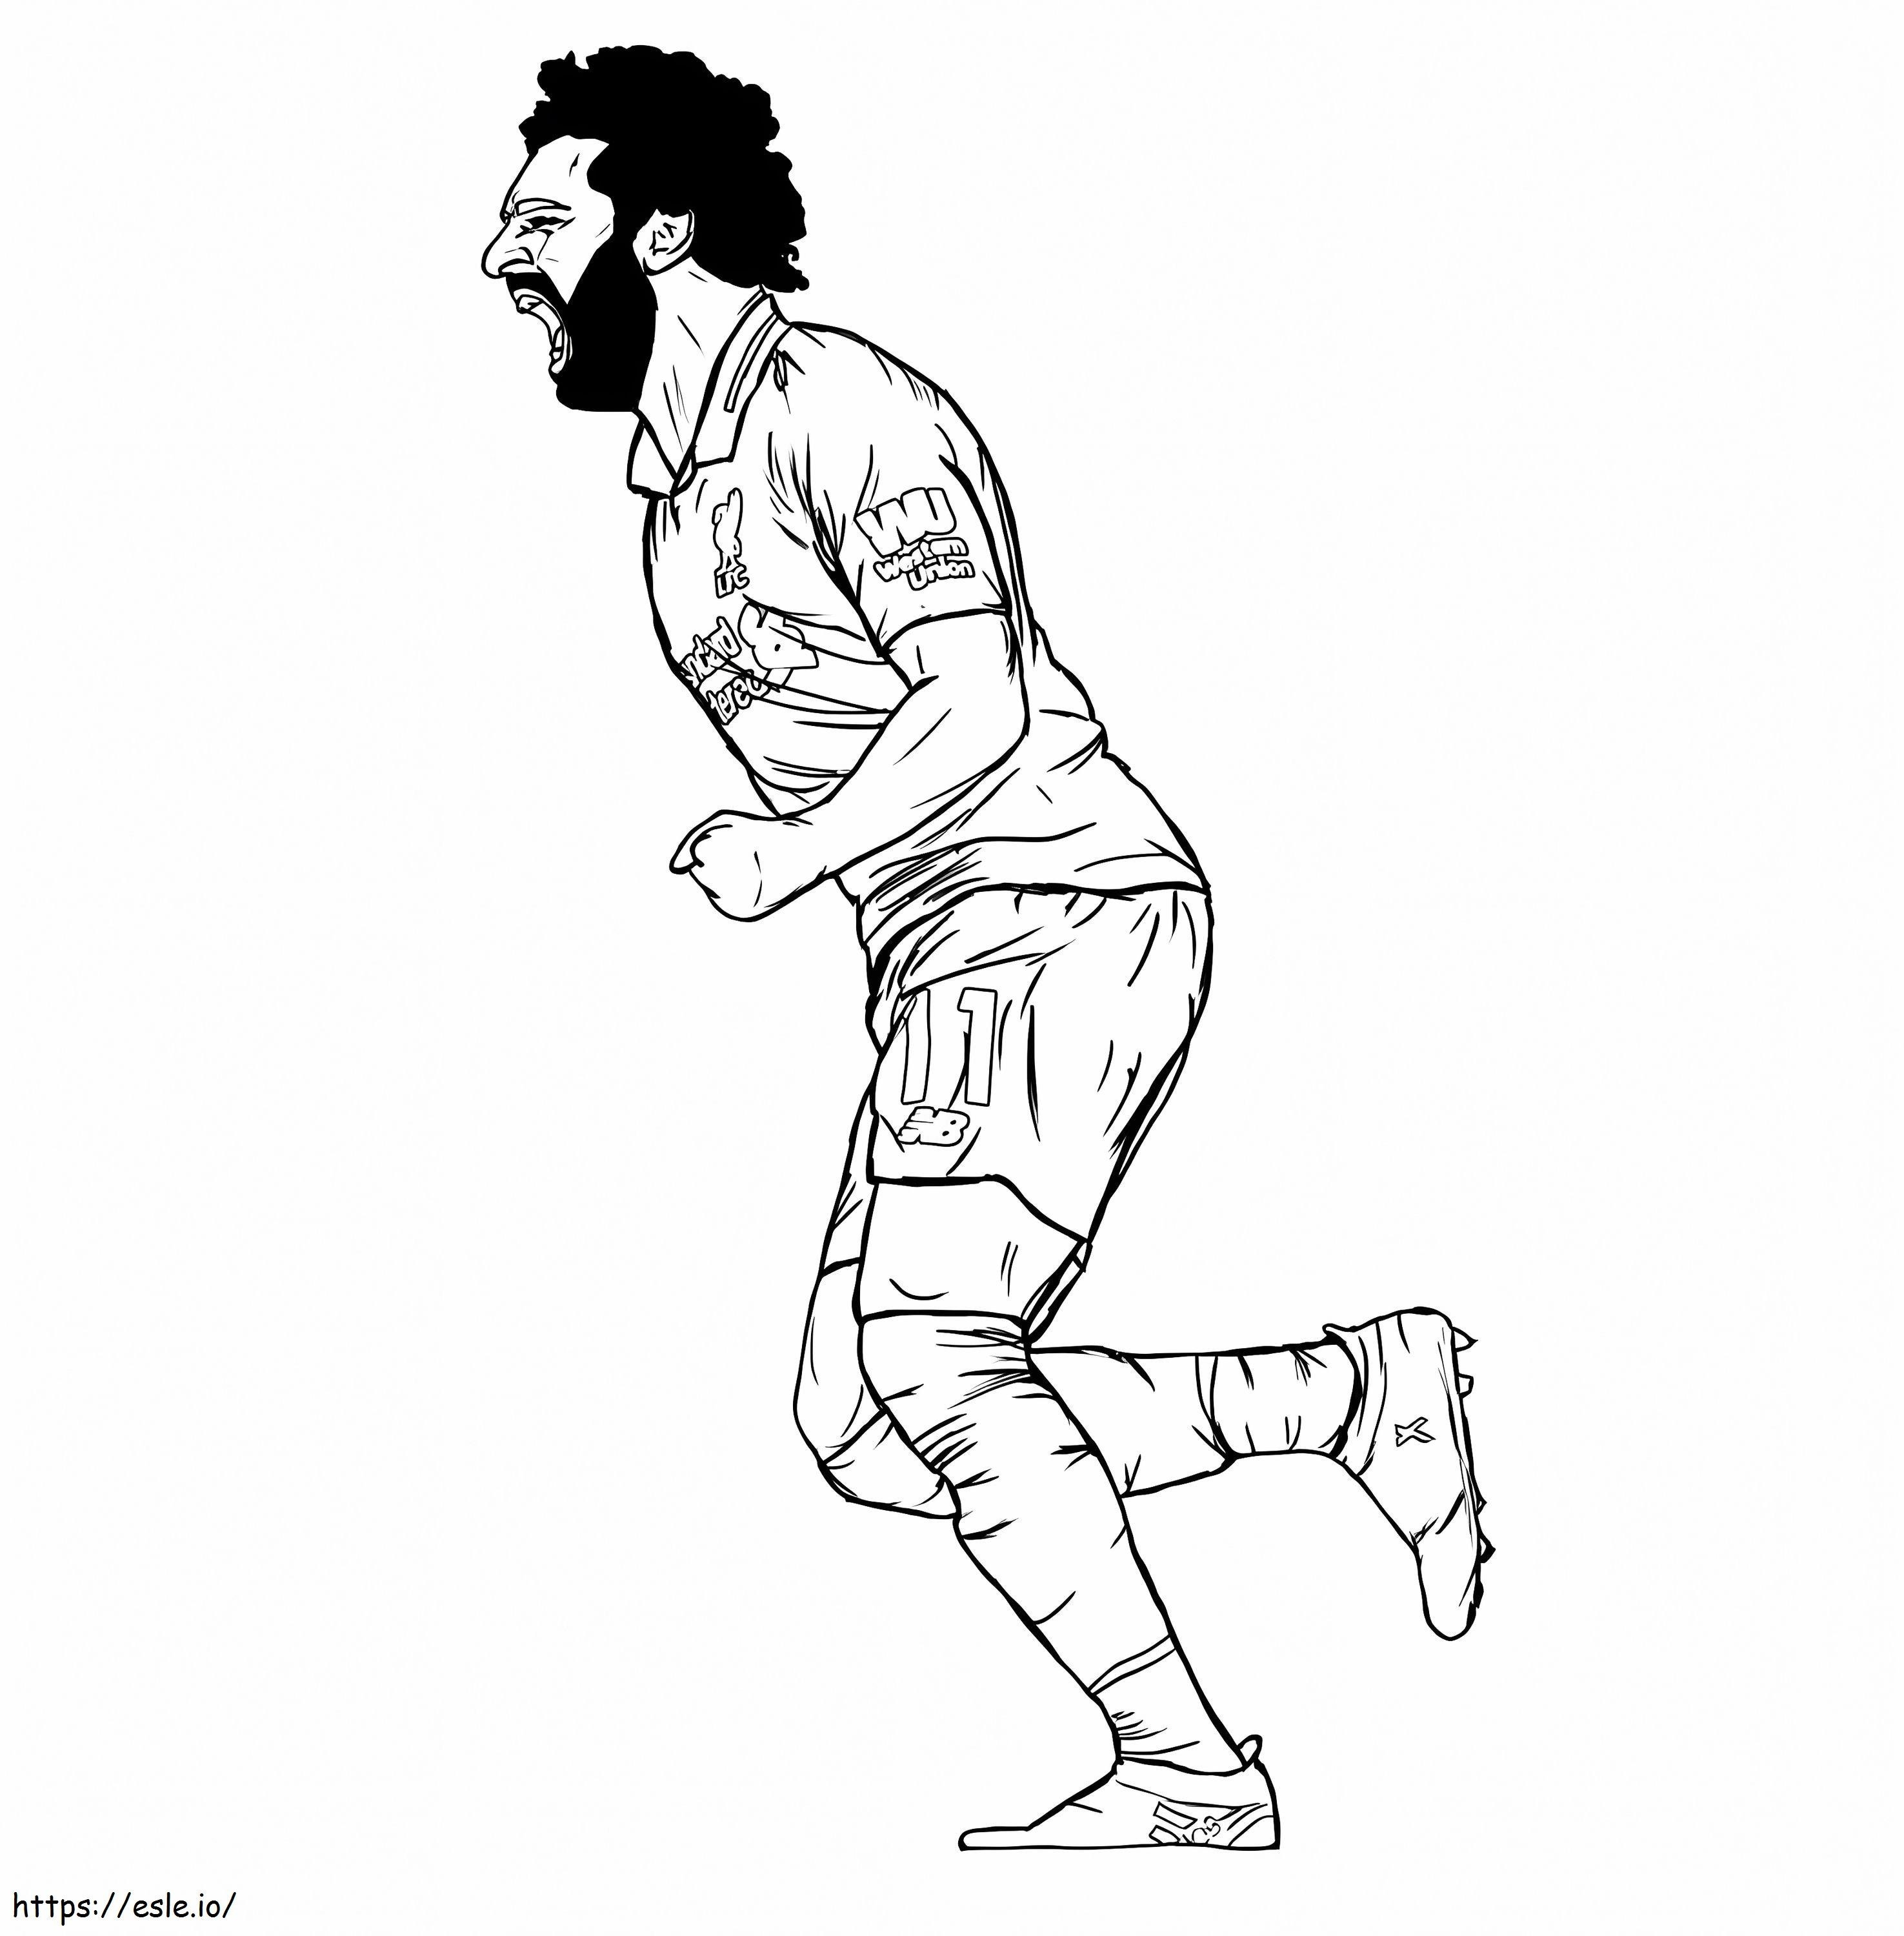 Mohamed Salah 7 para colorear